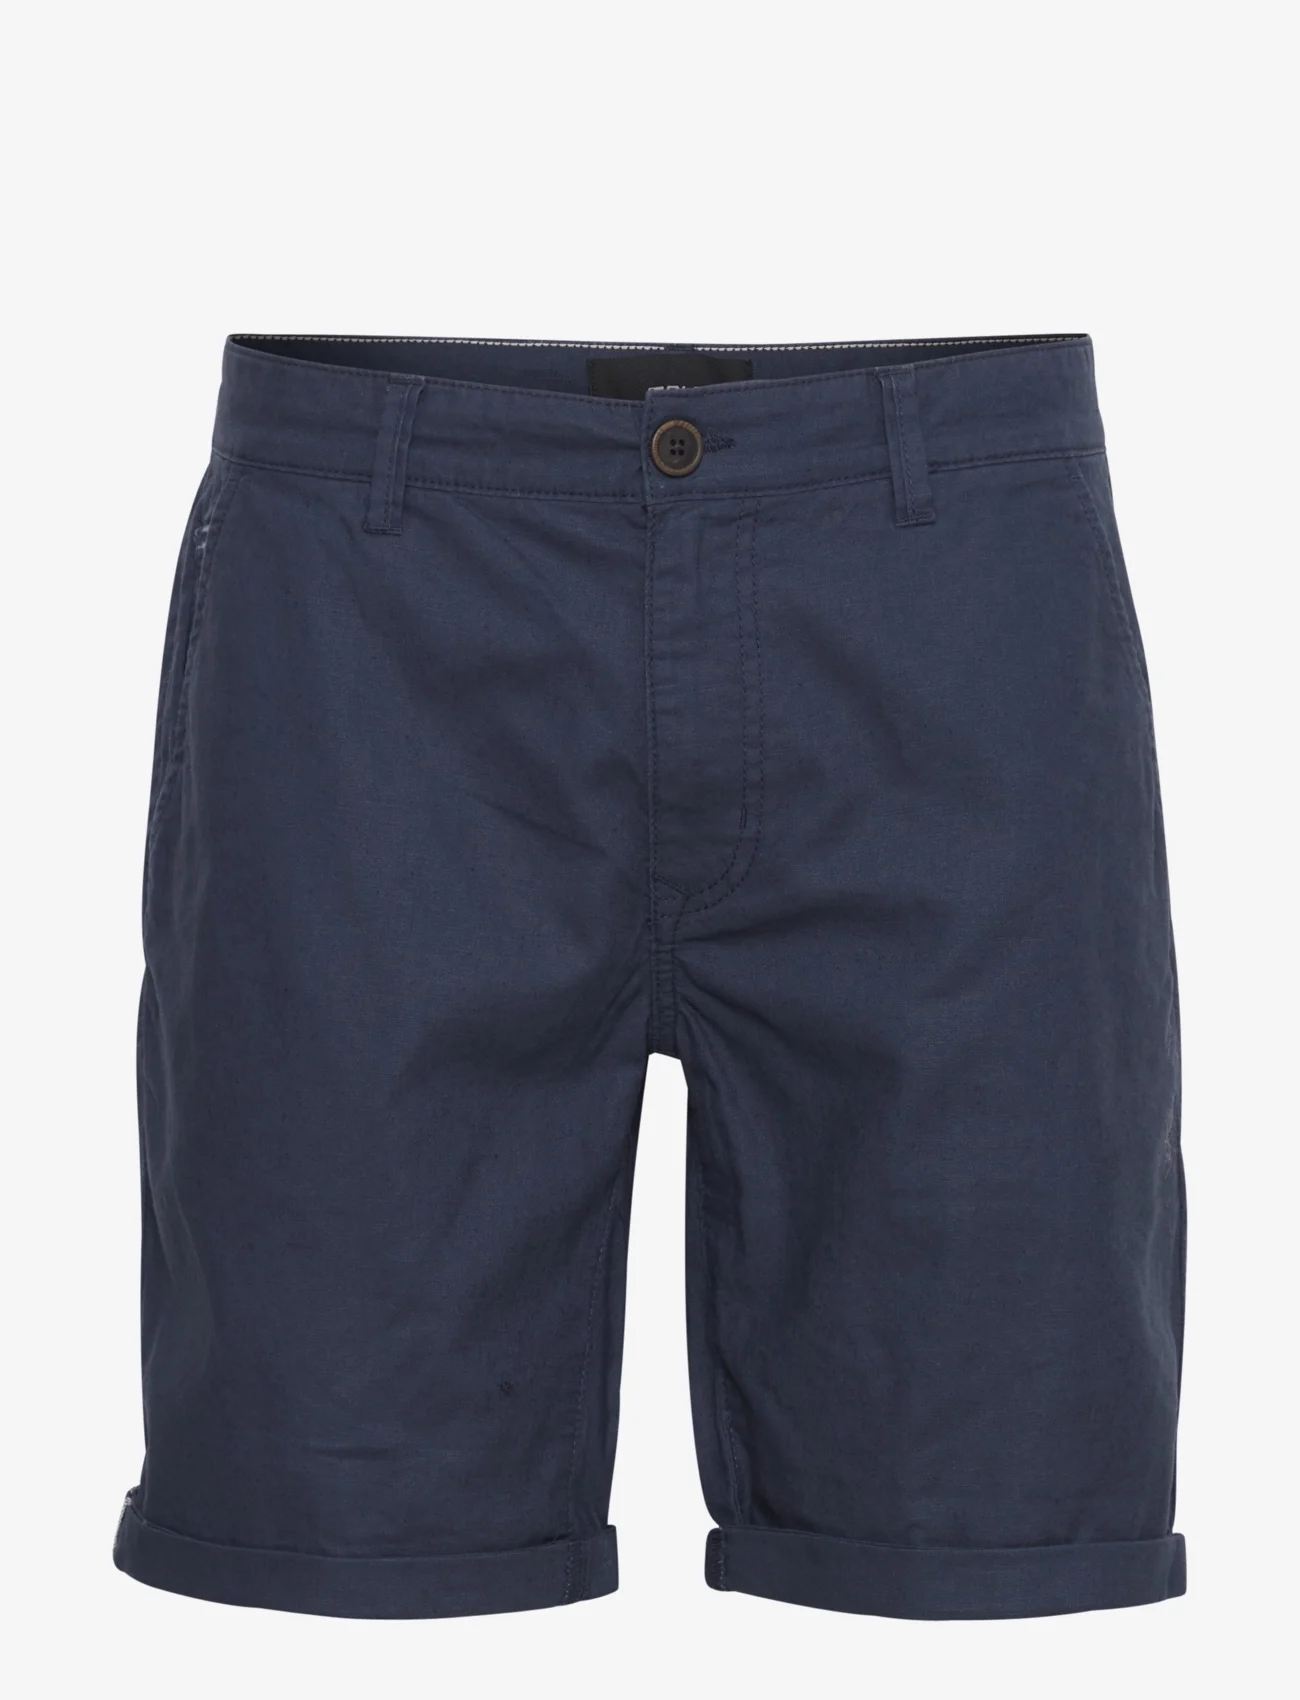 Blend - Shorts - linen shorts - dress blues - 1